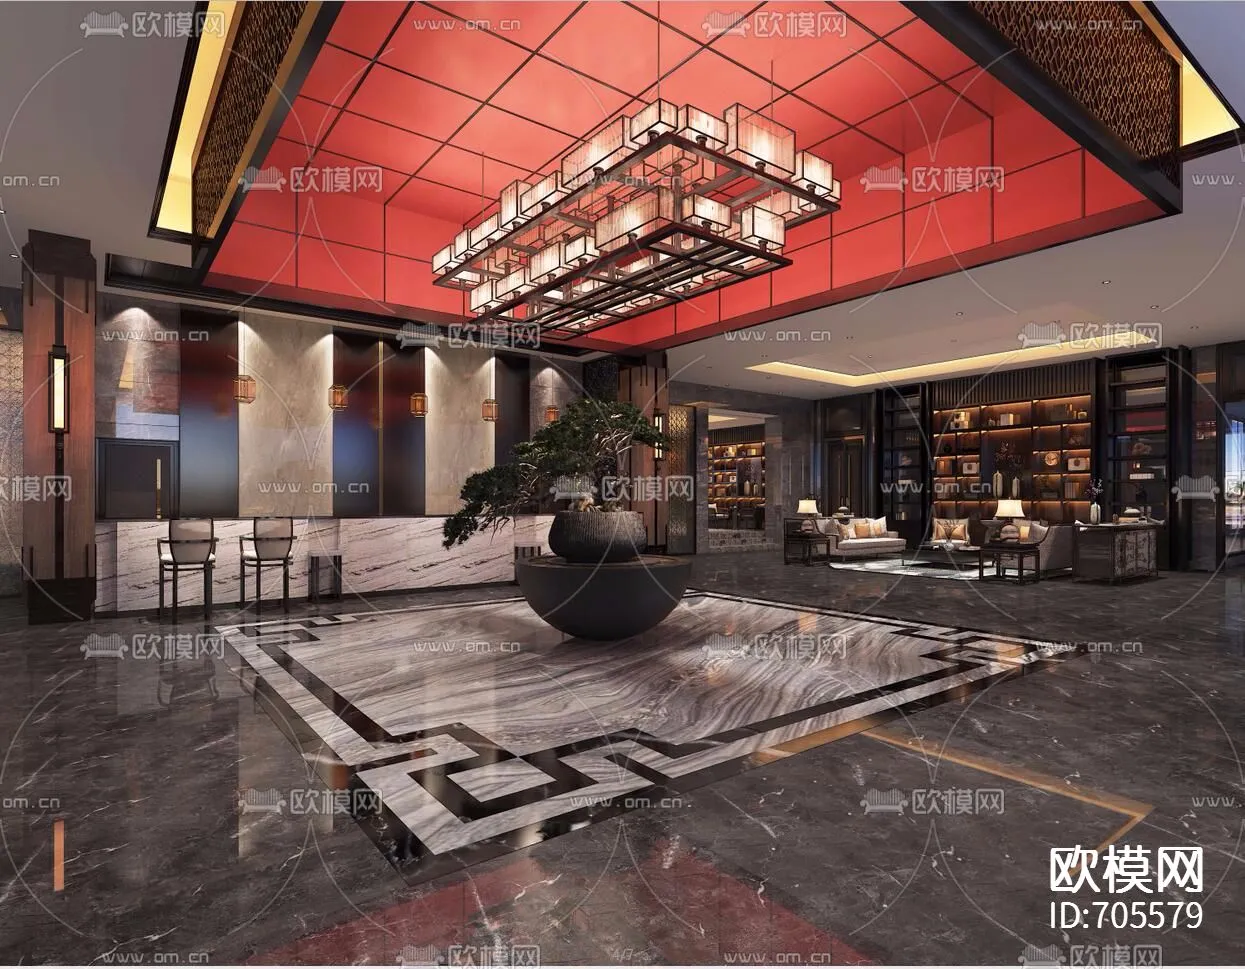 Hotel Lobby 3D Scenes – 0518